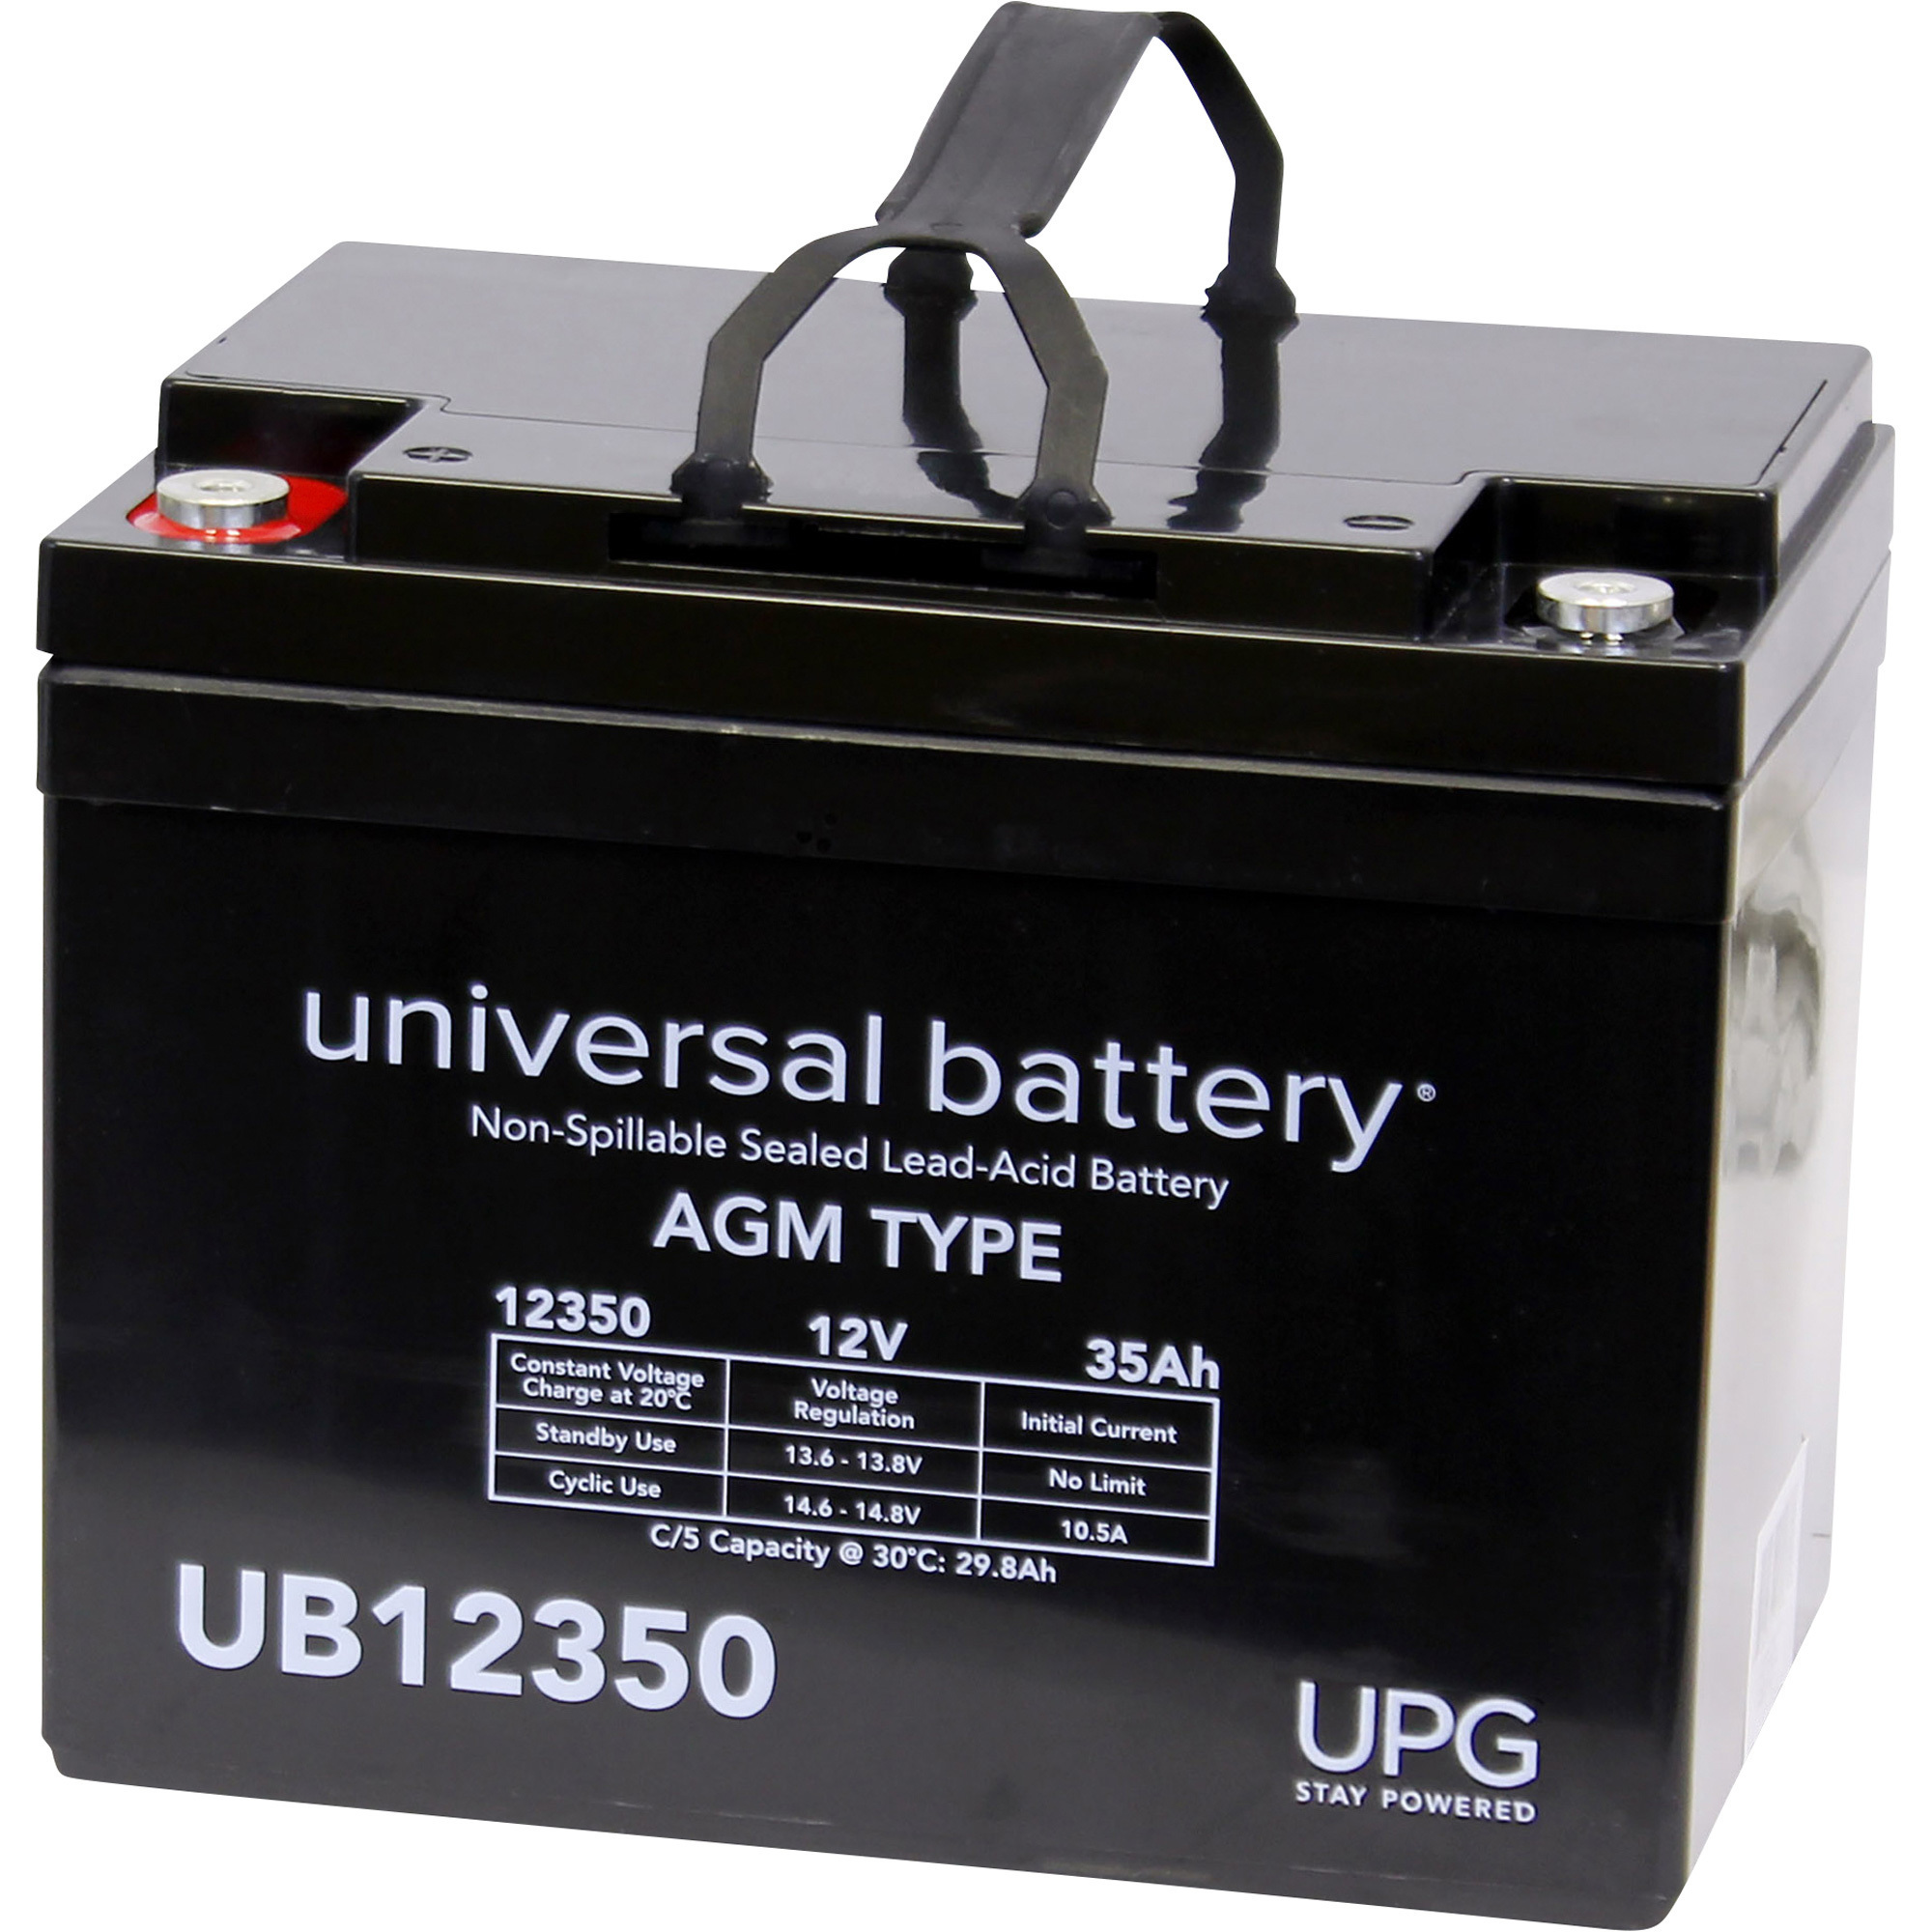 UPG Universal Sealed Lead-Acid Battery, AGM-type, 12V, 35 Amps, Group 22NF, Model UB12350